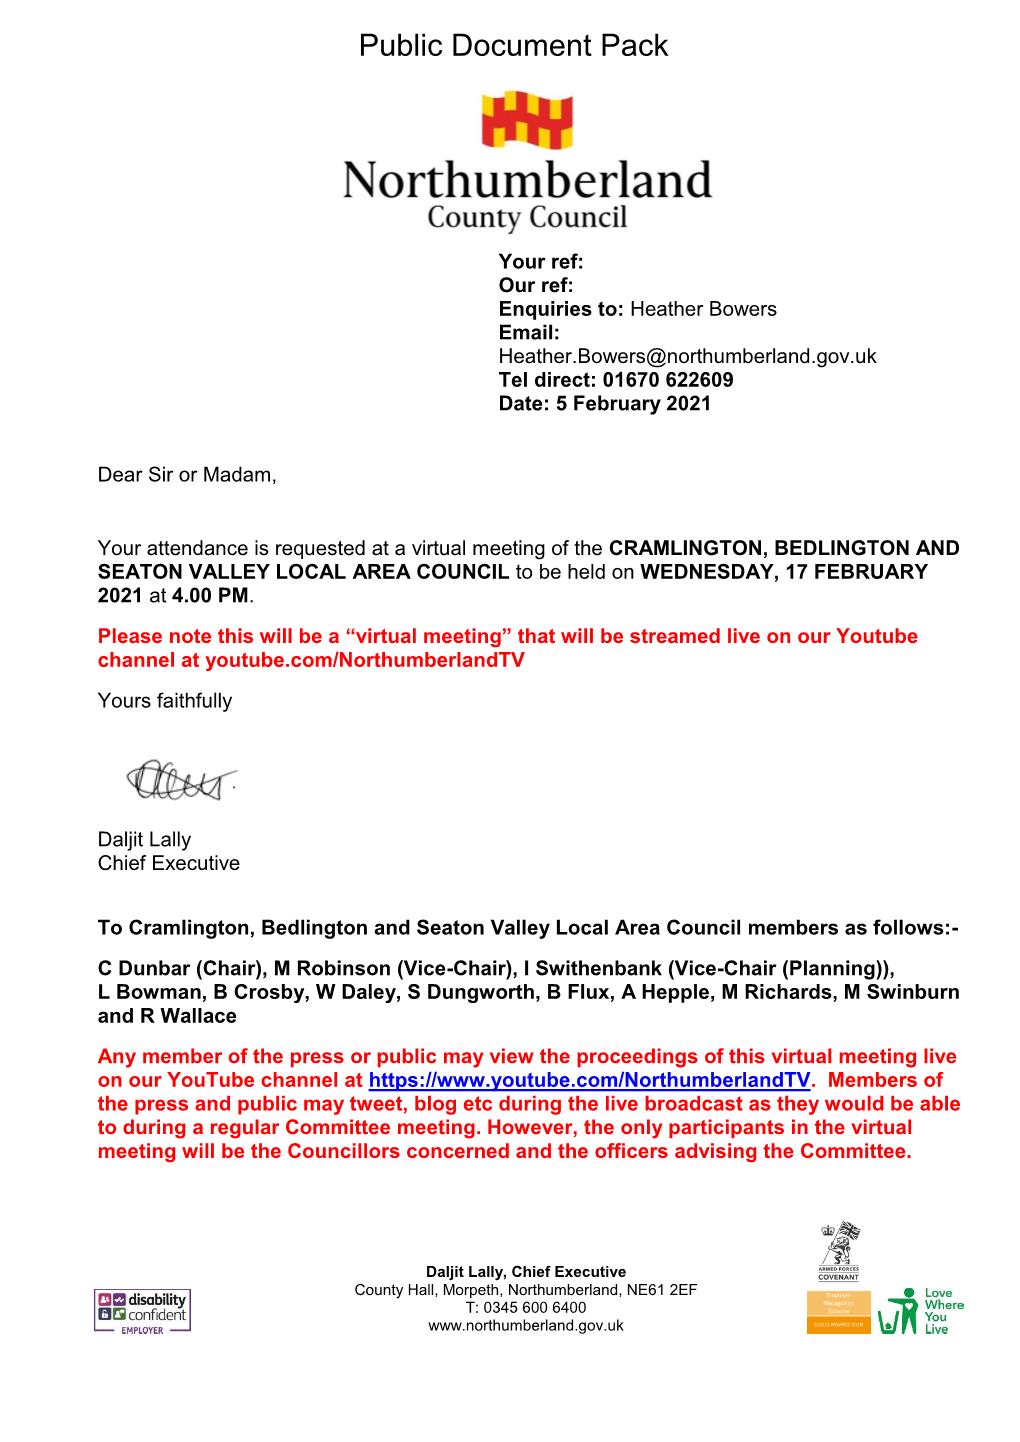 (Public Pack)Agenda Document for Cramlington, Bedlington And